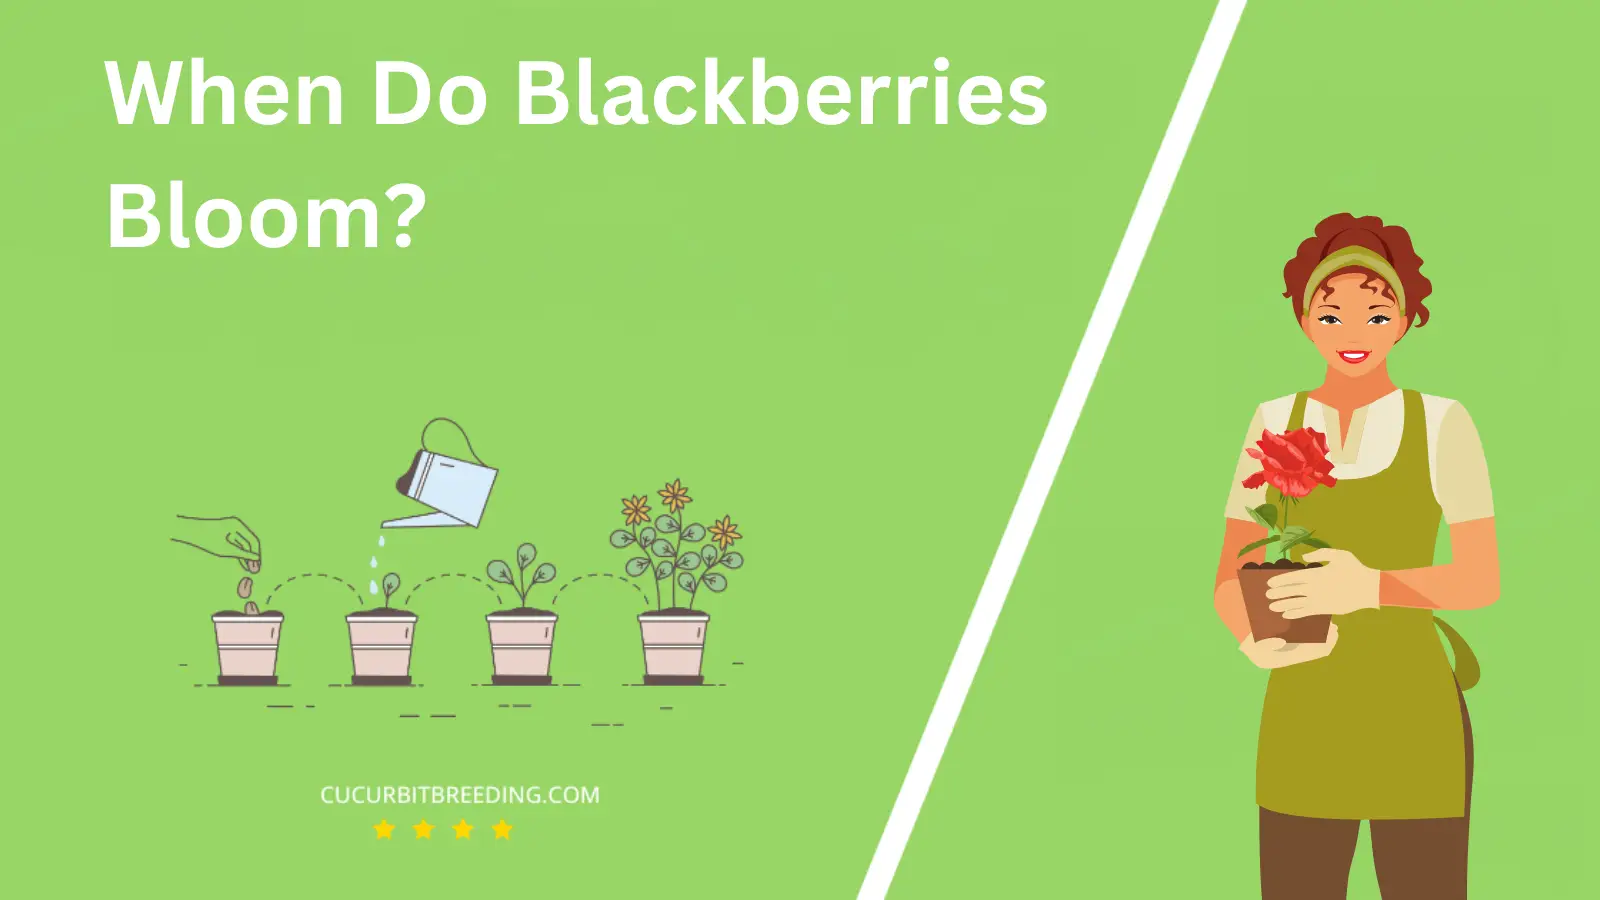 When Do Blackberries Bloom?